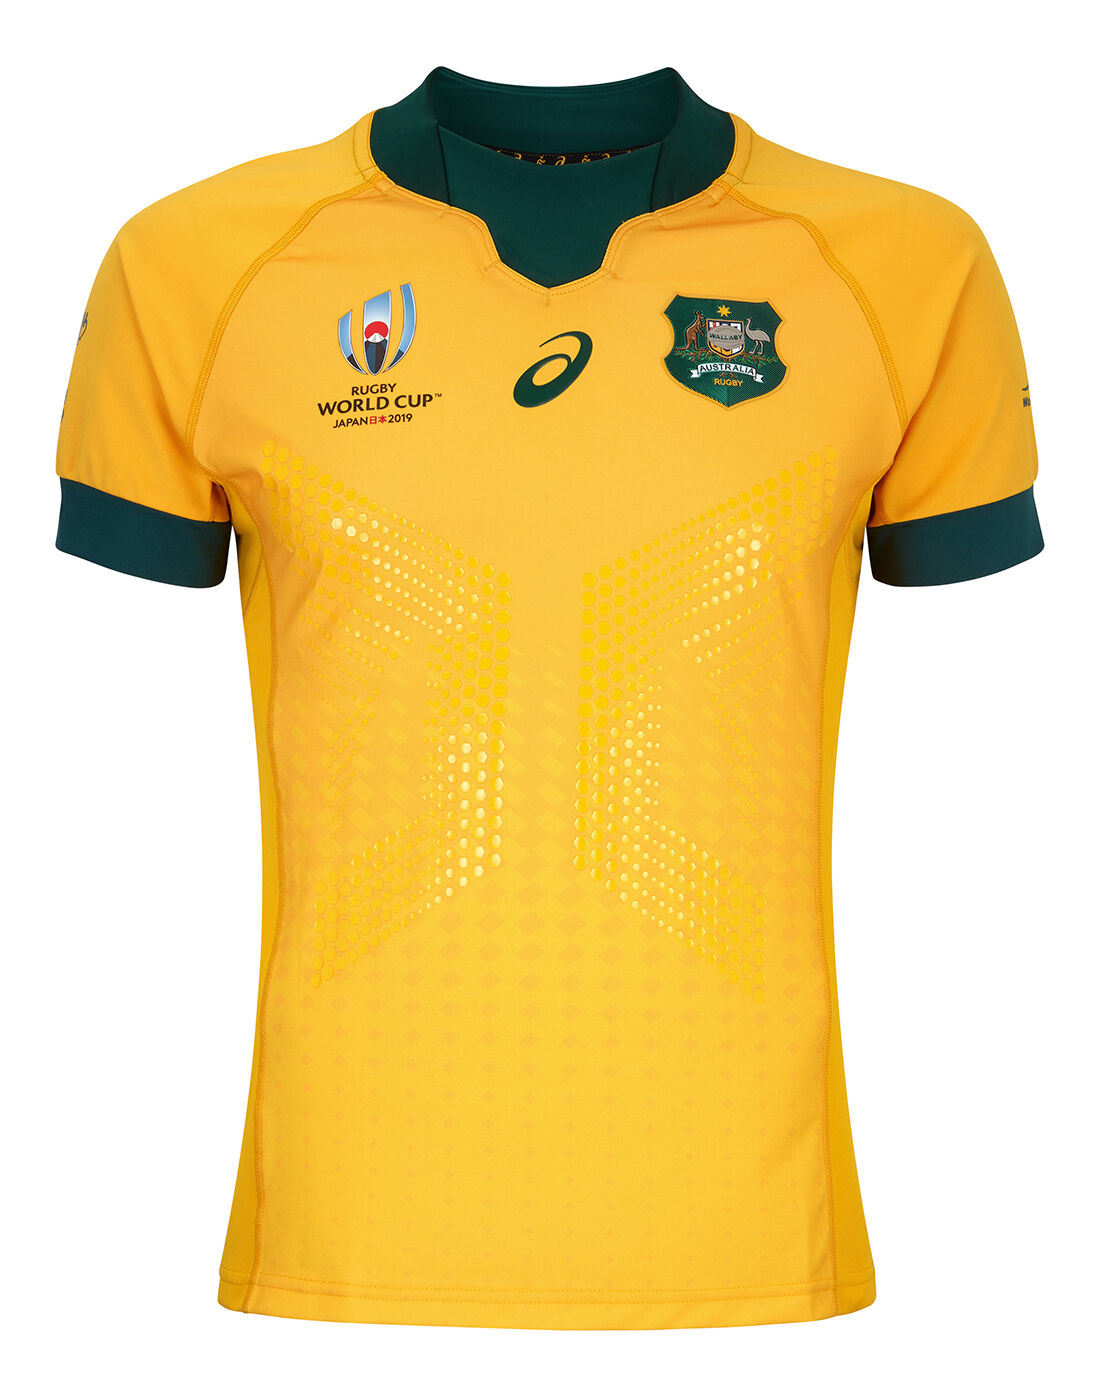 jersey australia 2019